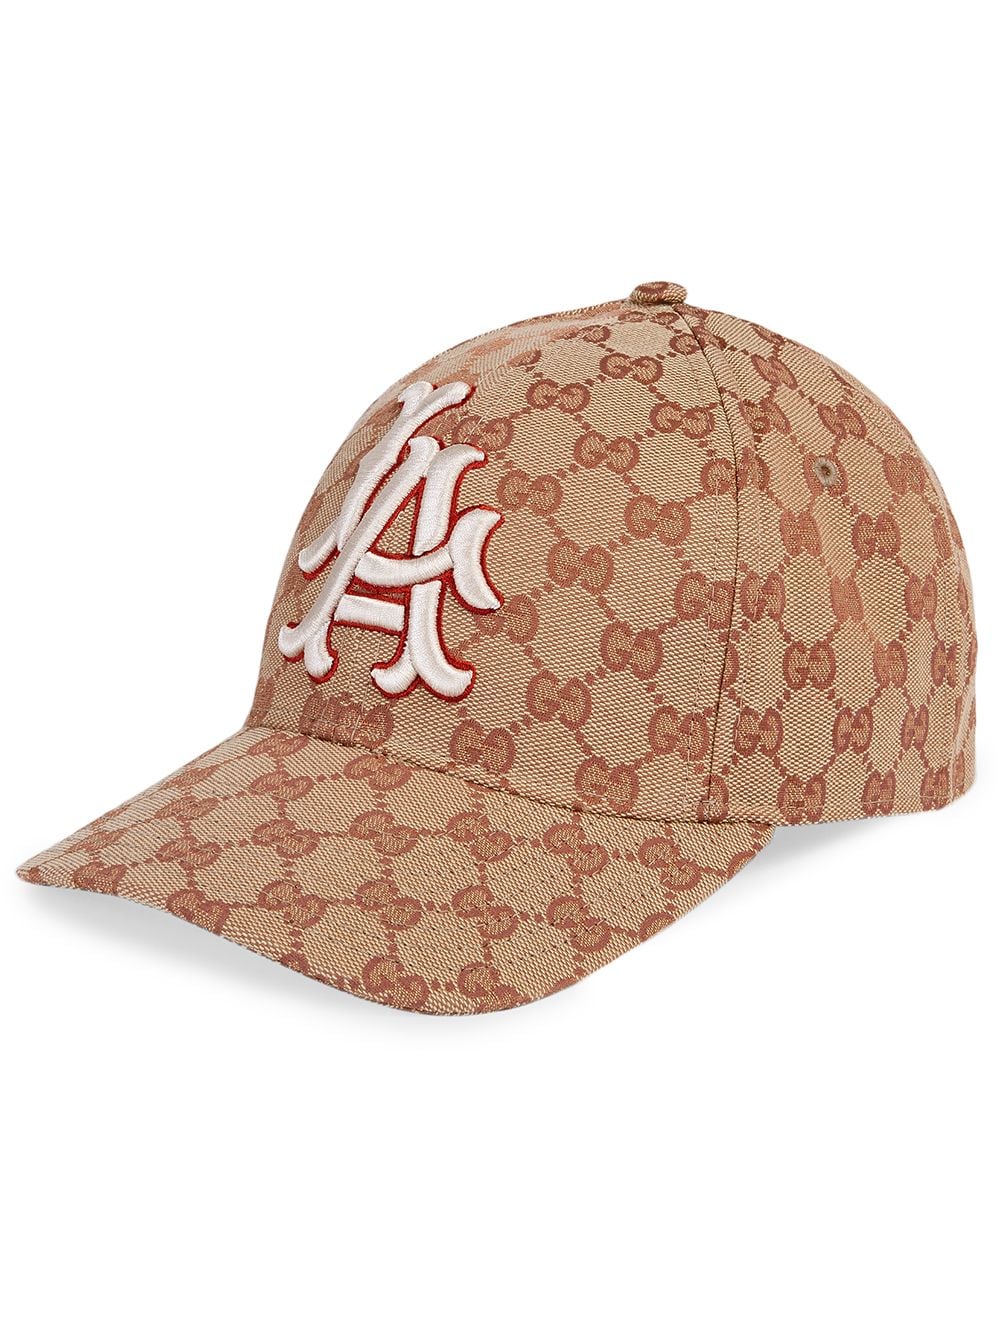 Gucci Baseball hat with LA Angels 